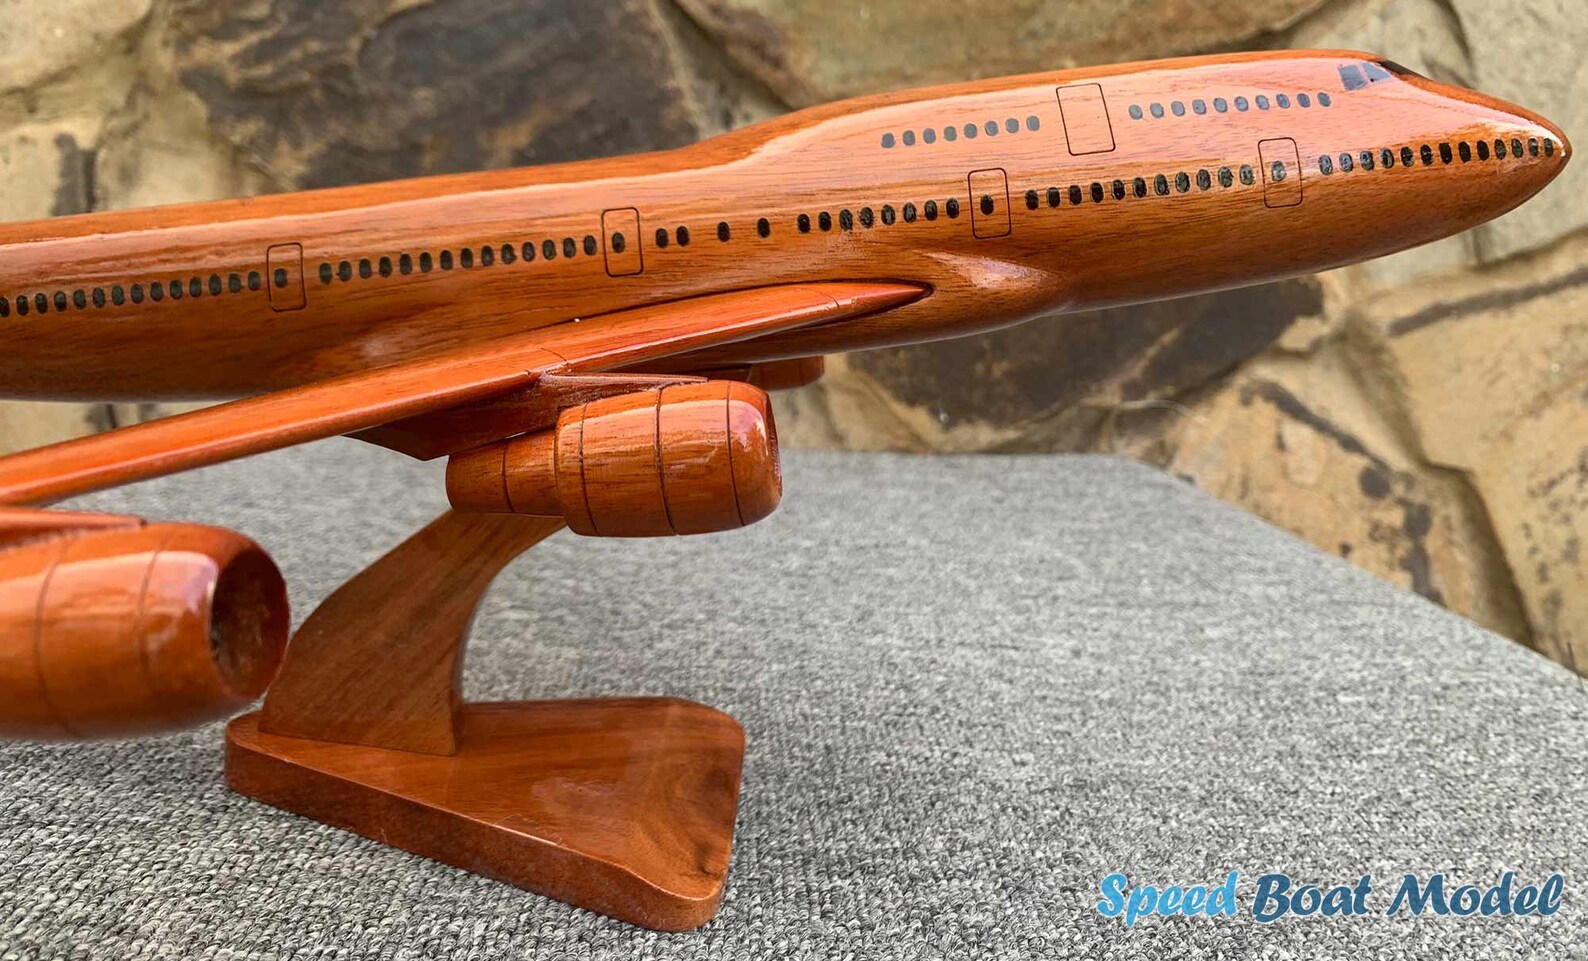 Boeing 747 Wooden Airplane Model 17.7"